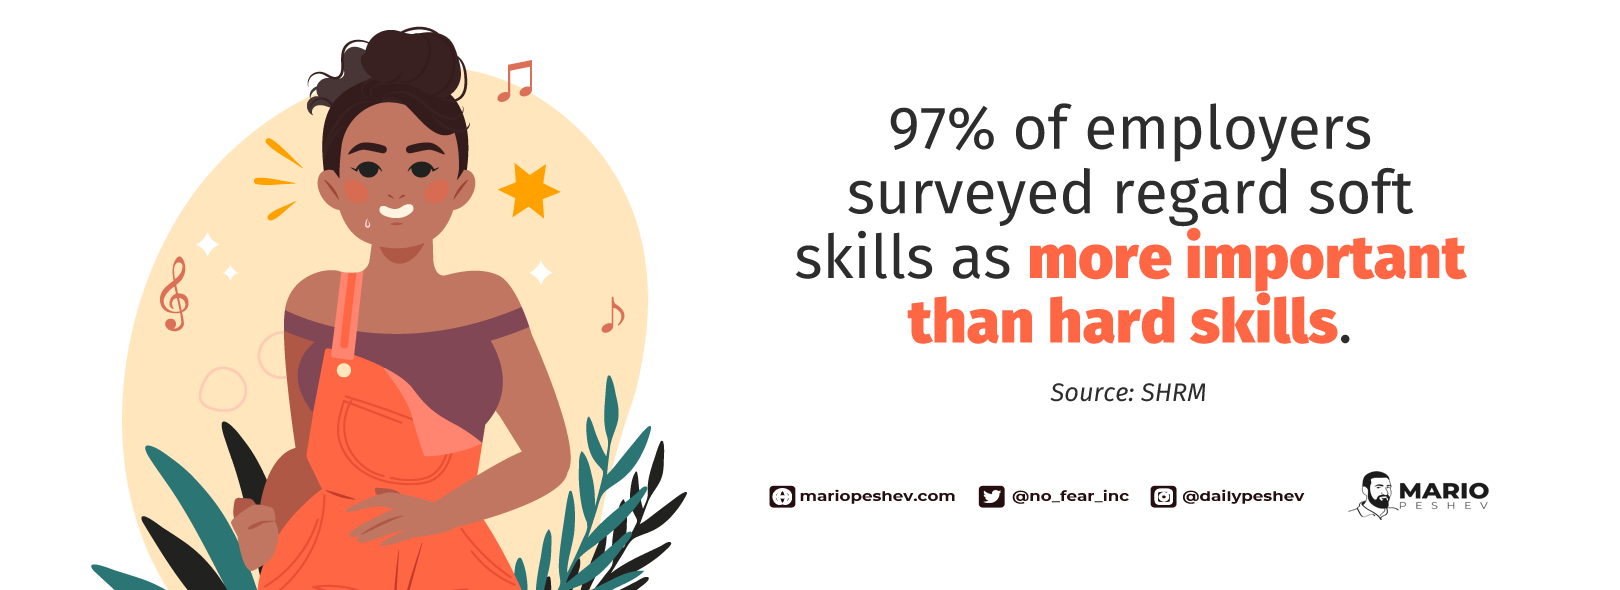 97% of employers surveyed regard soft skills as more important than hard skills.